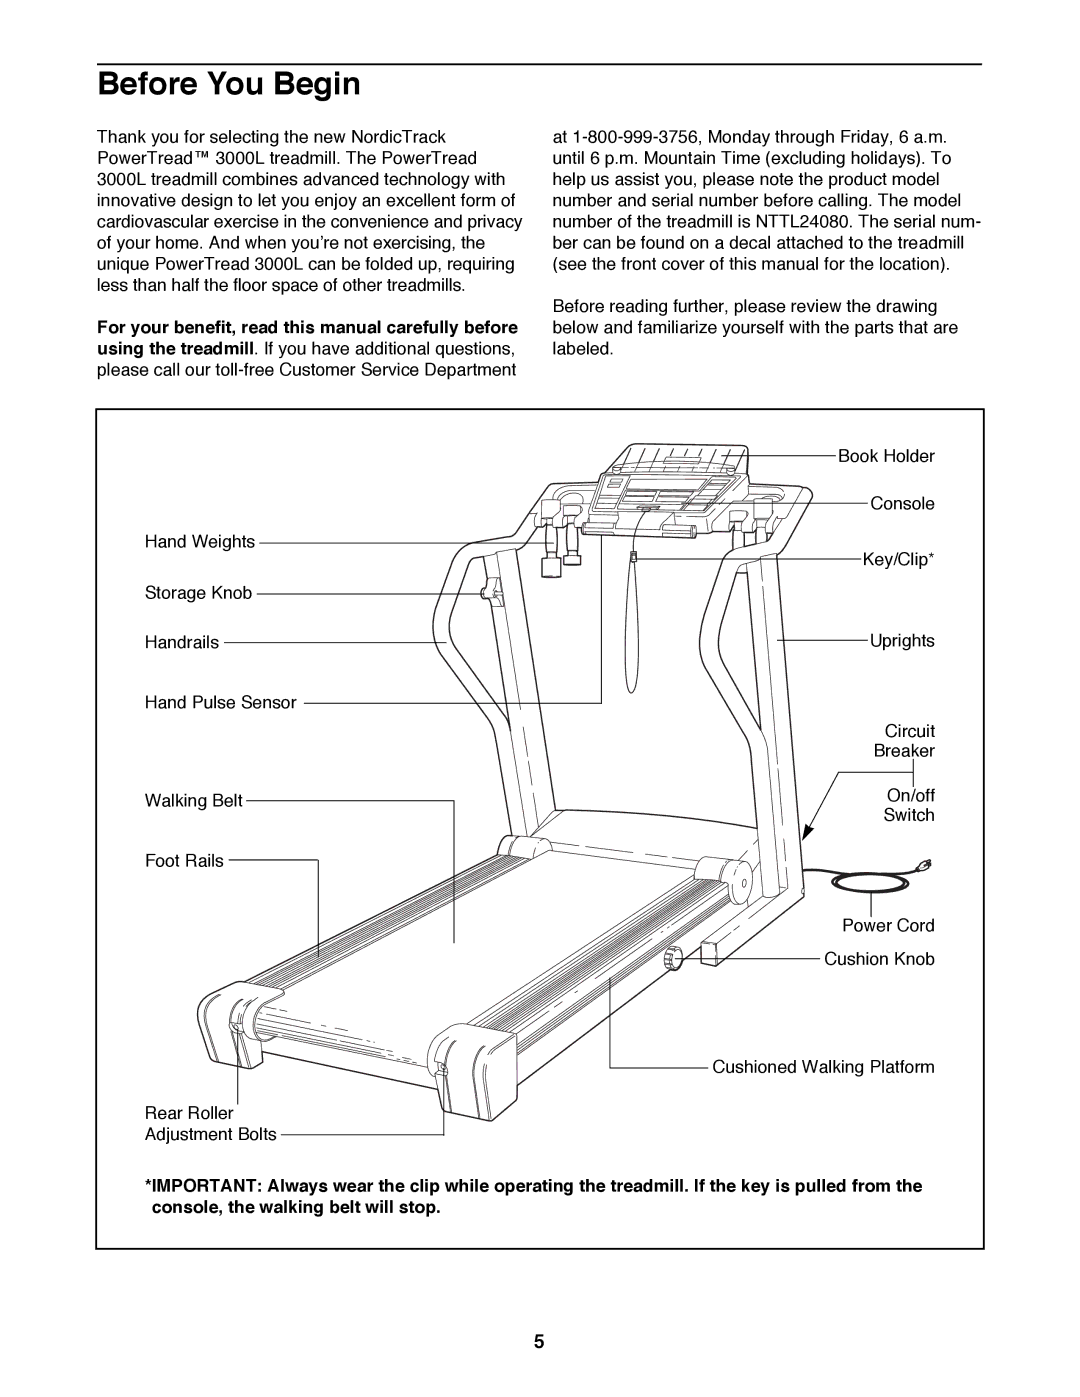 NordicTrack NTTL24080 manual Before You Begin 